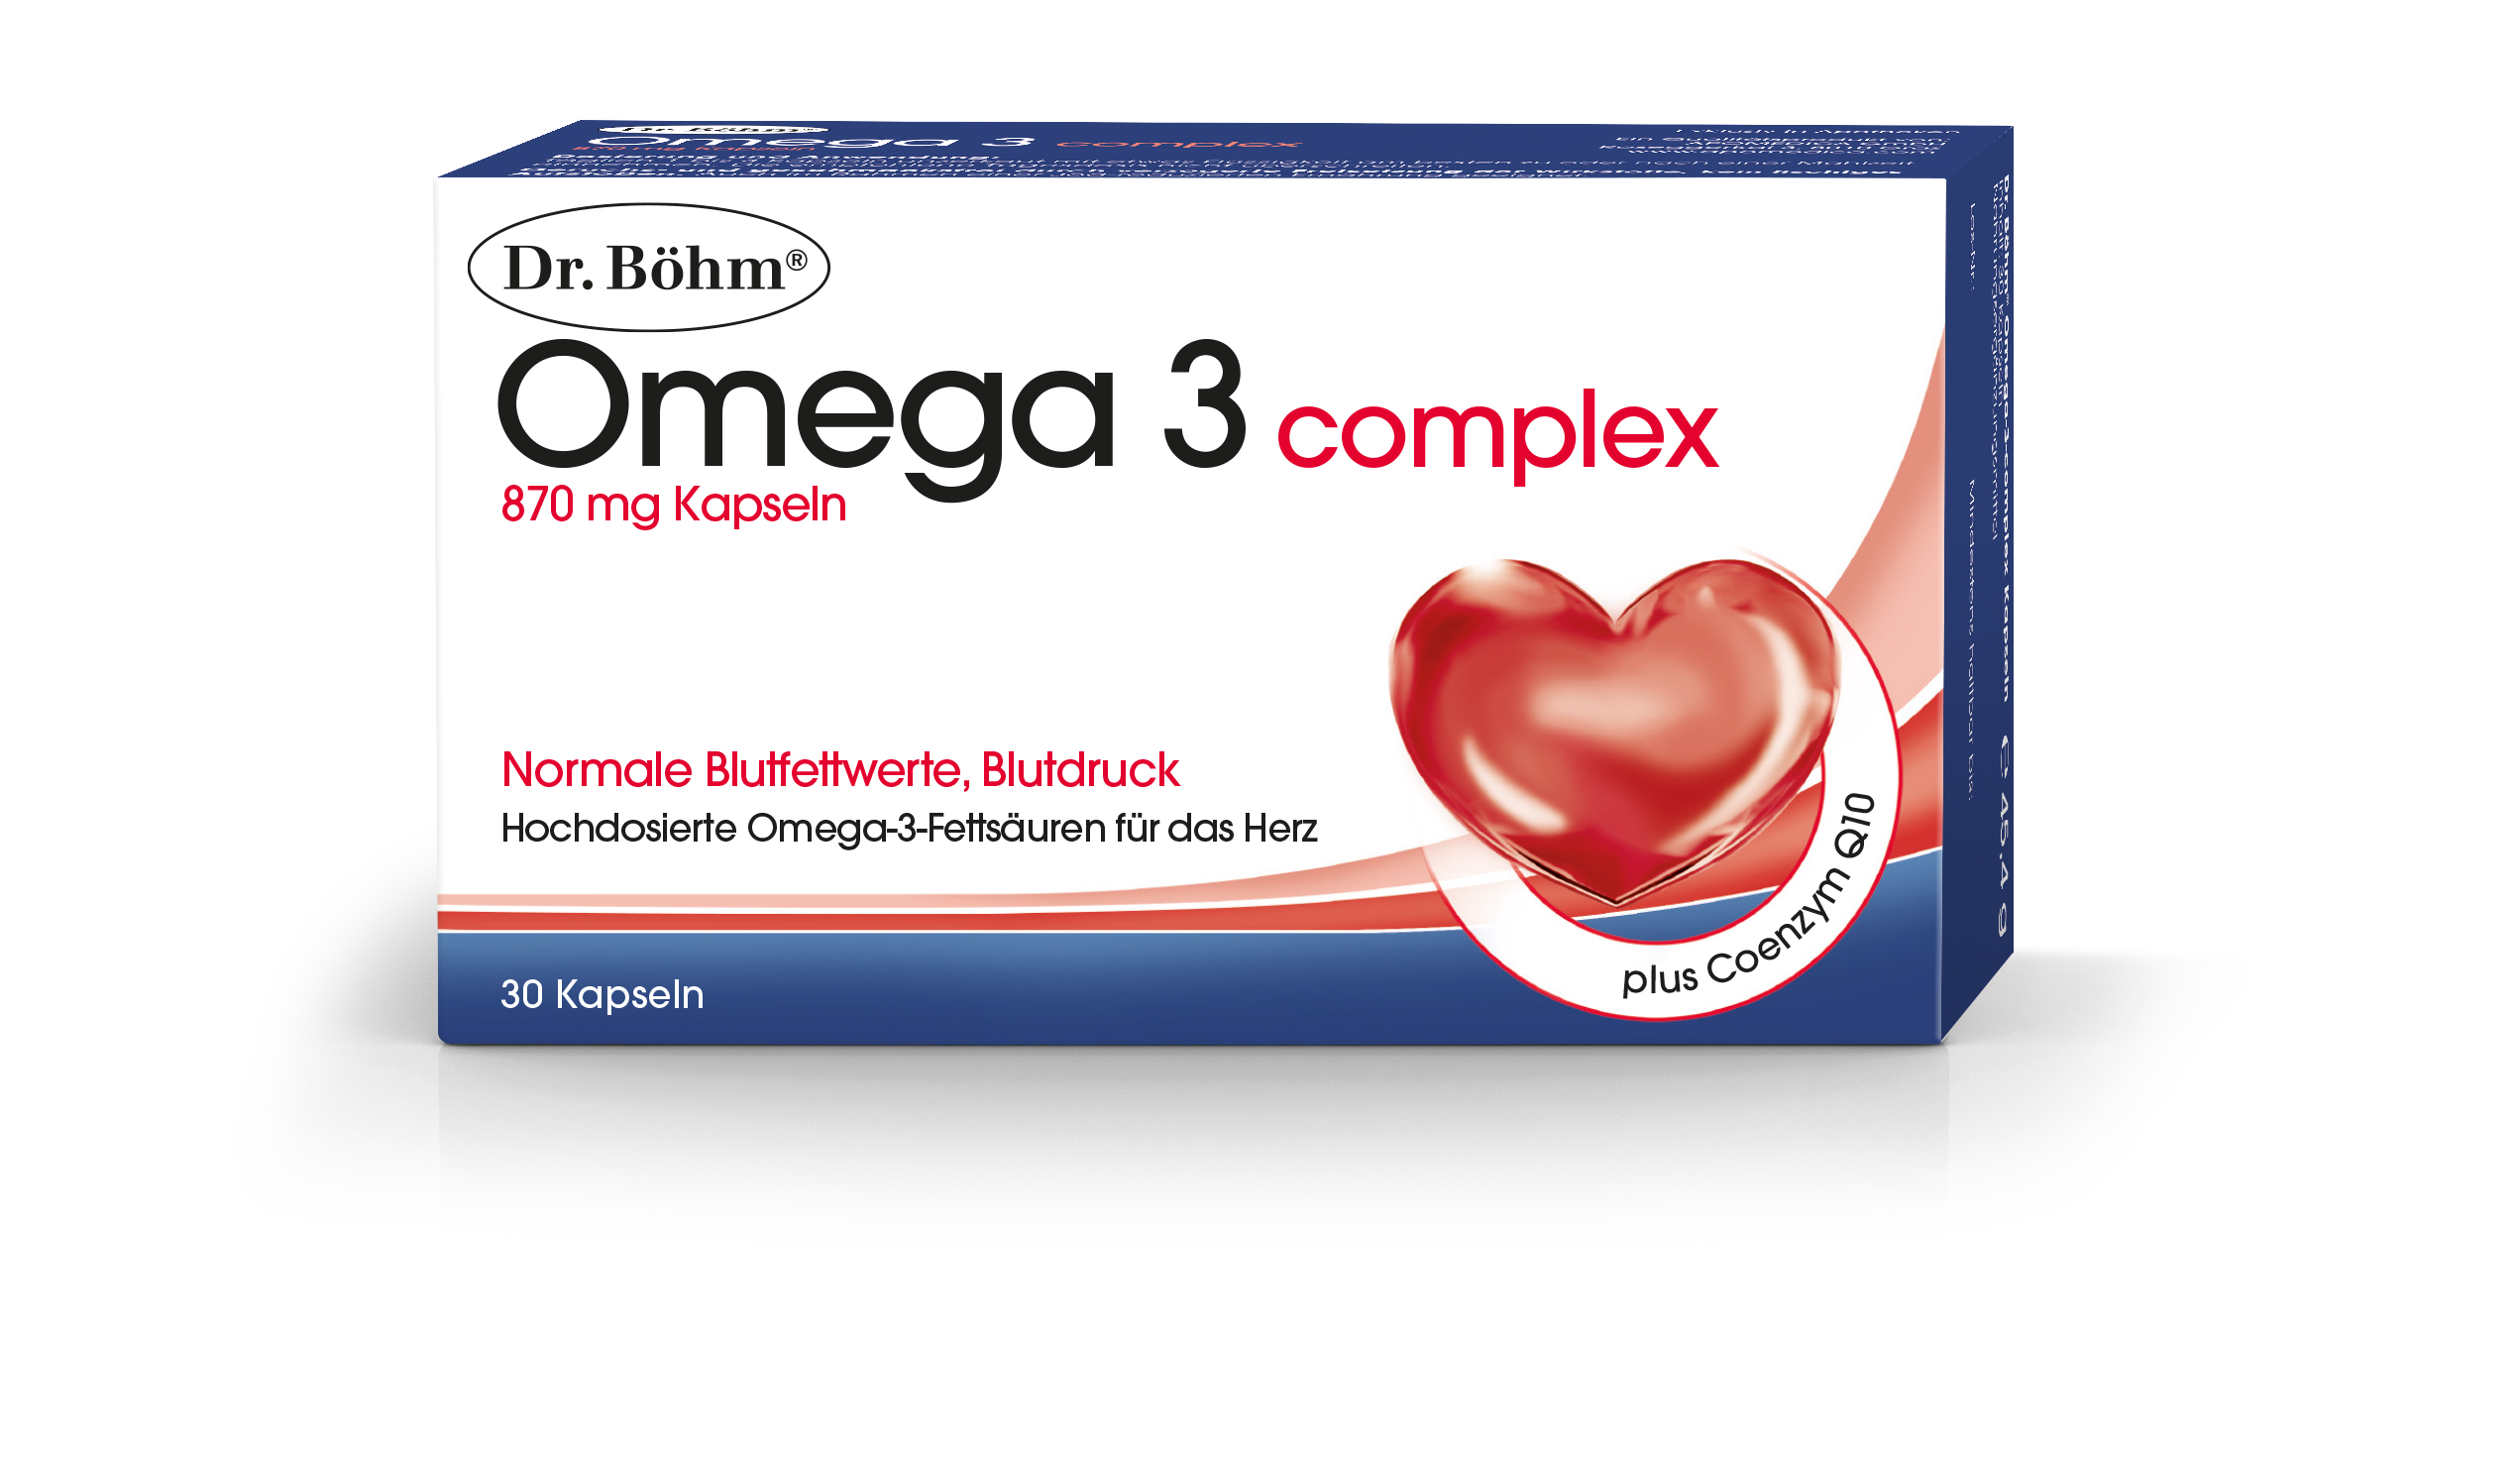 Dr. Böhm Omega 3 complex Kapseln